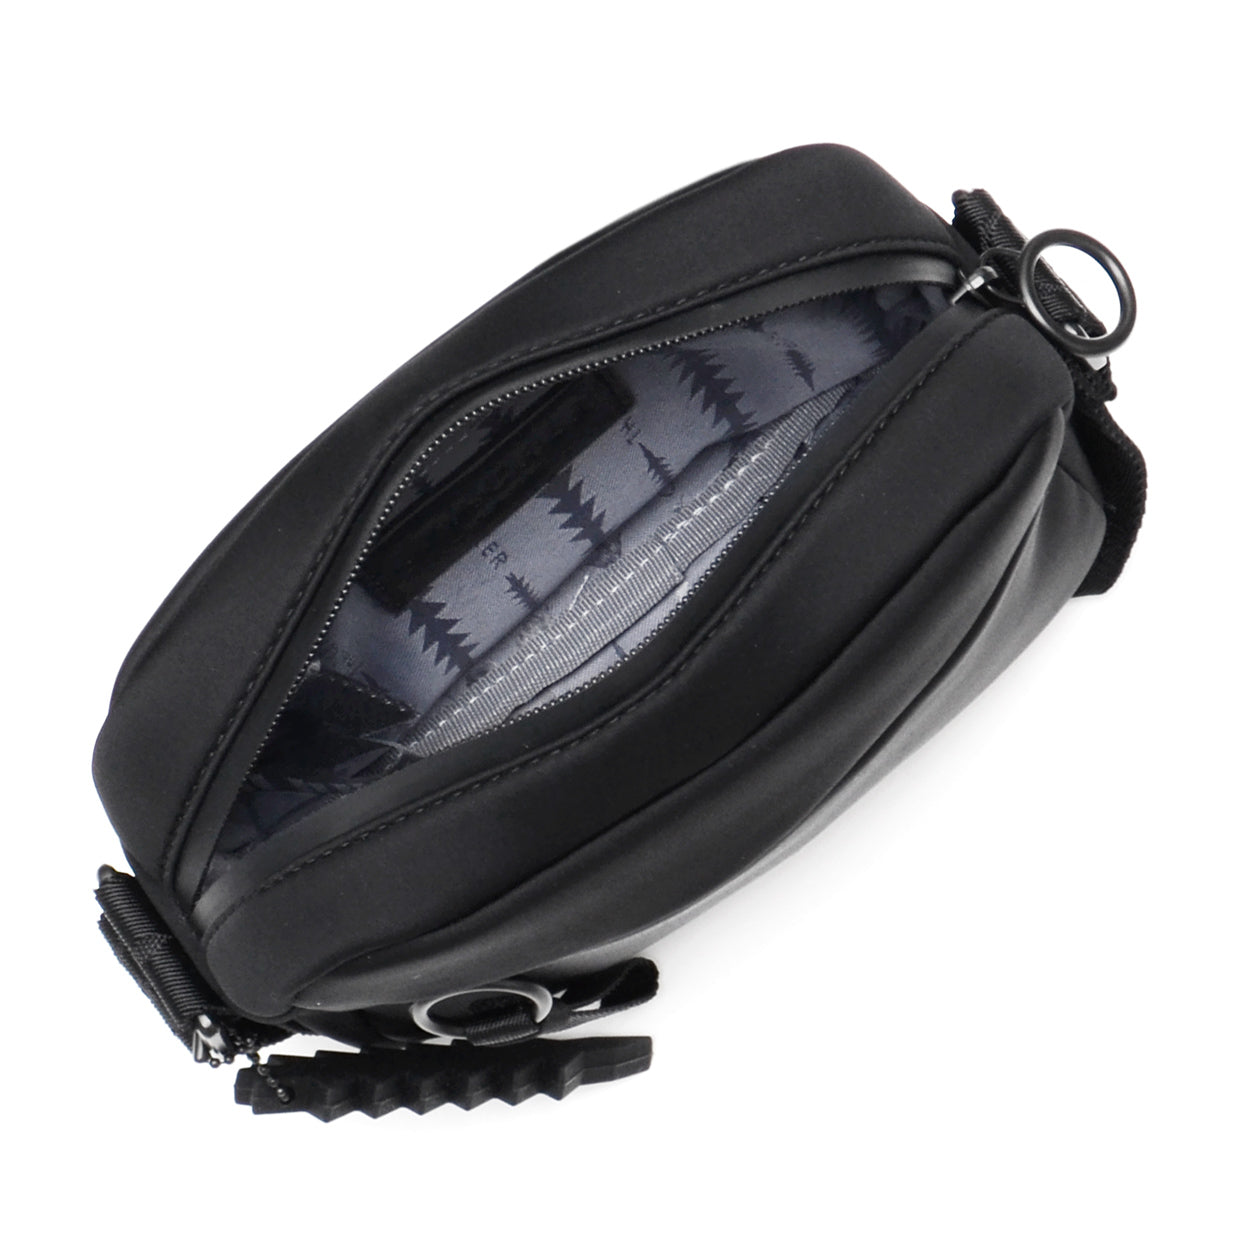 Cocoon camera Belt Bag | Black Neoprene